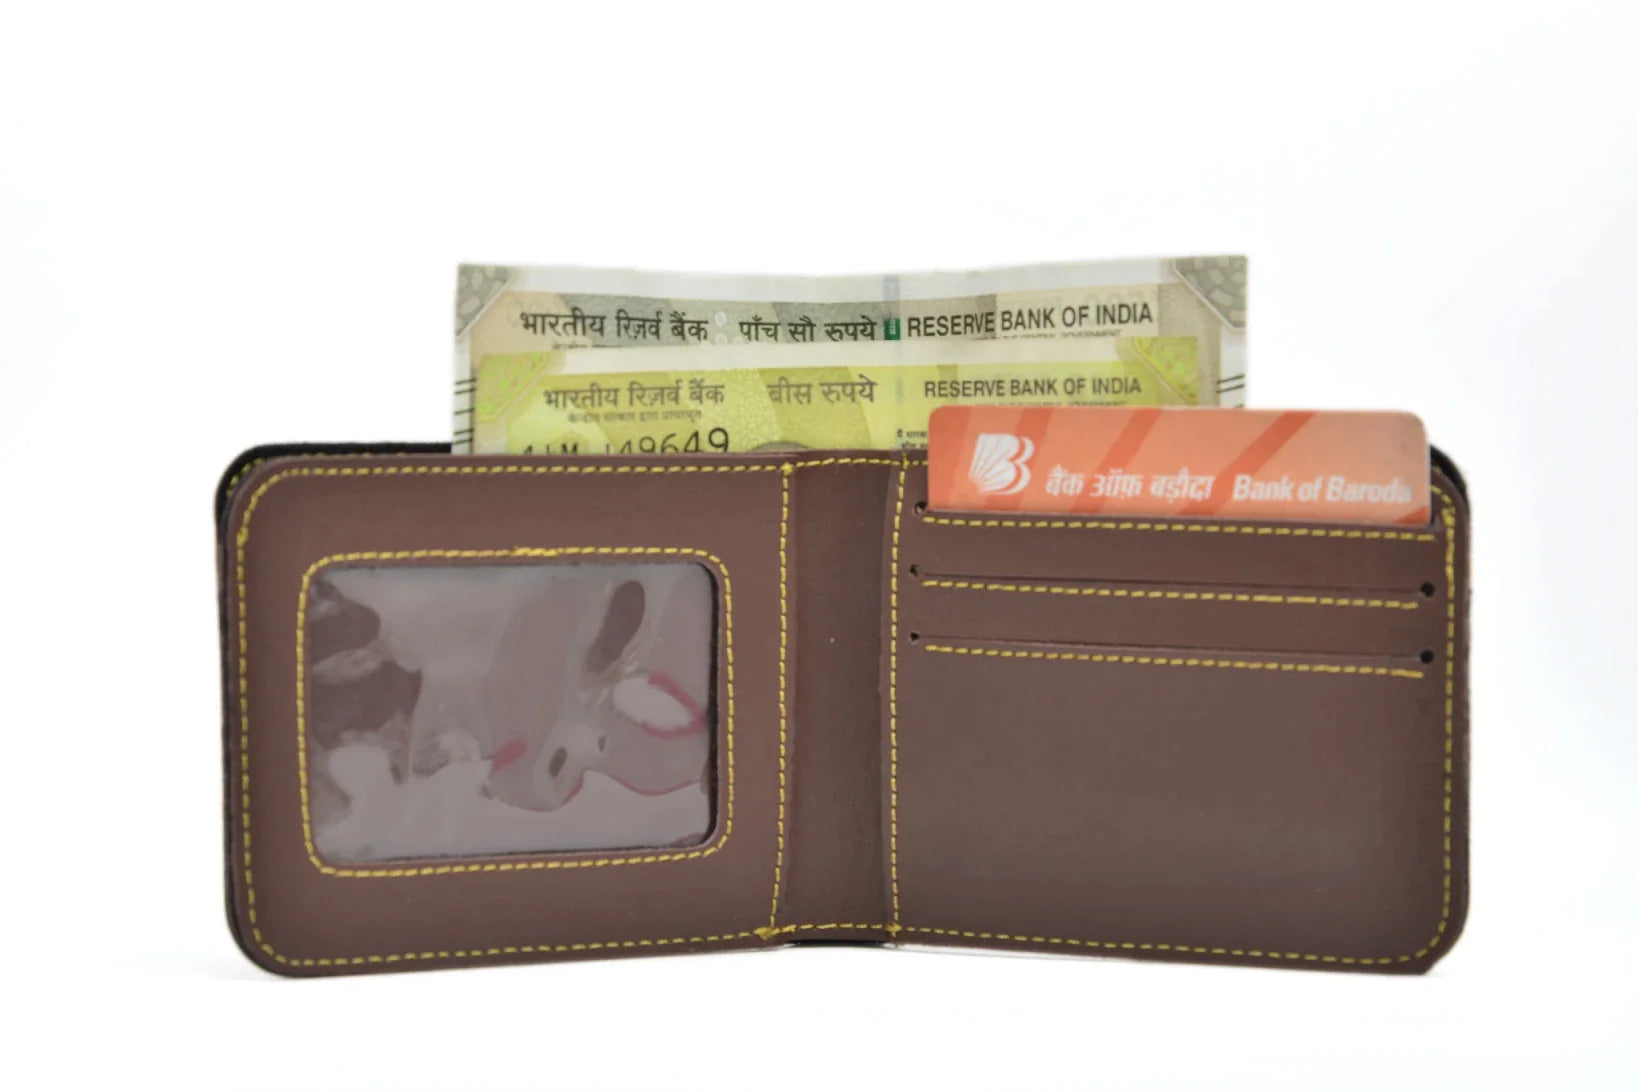 personalized men's wallet open look